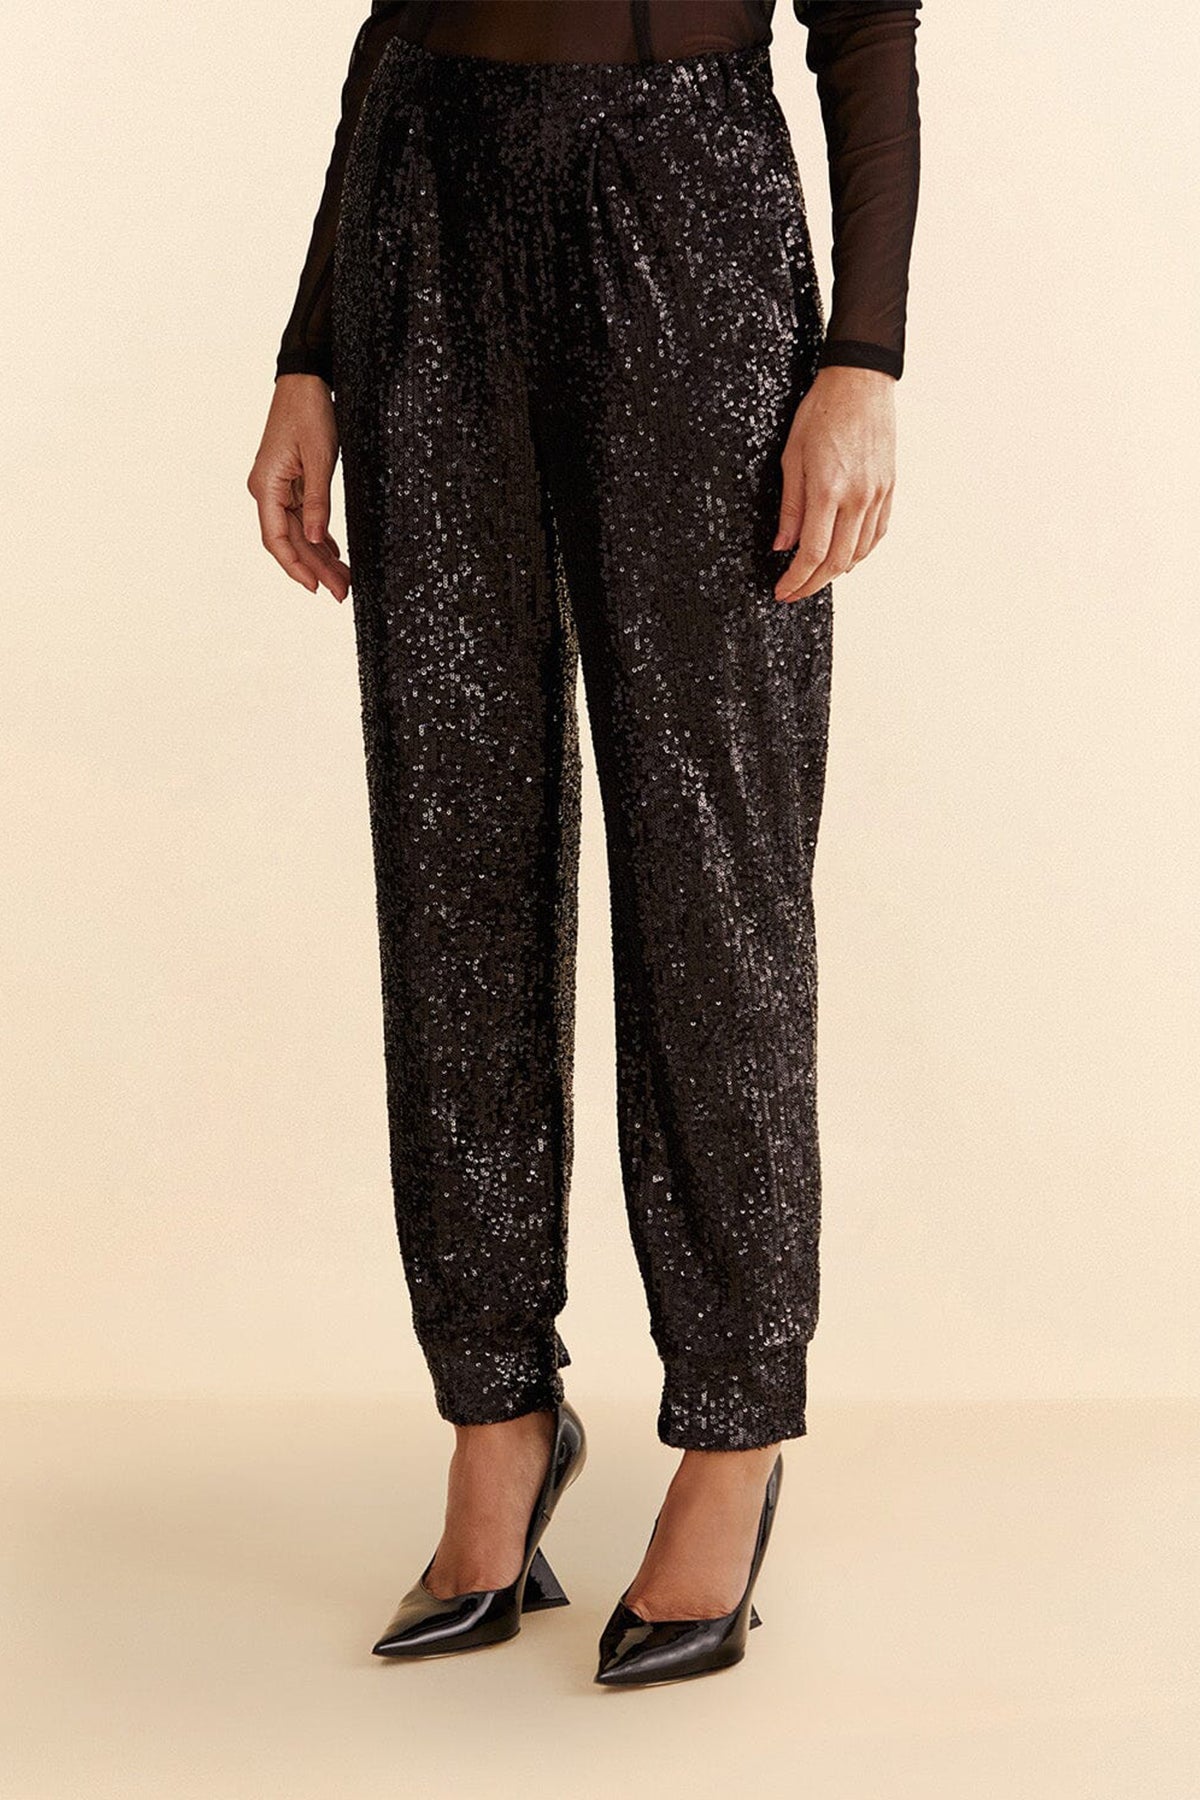 Black Sequin Pajama Pants - shop-olivia.com